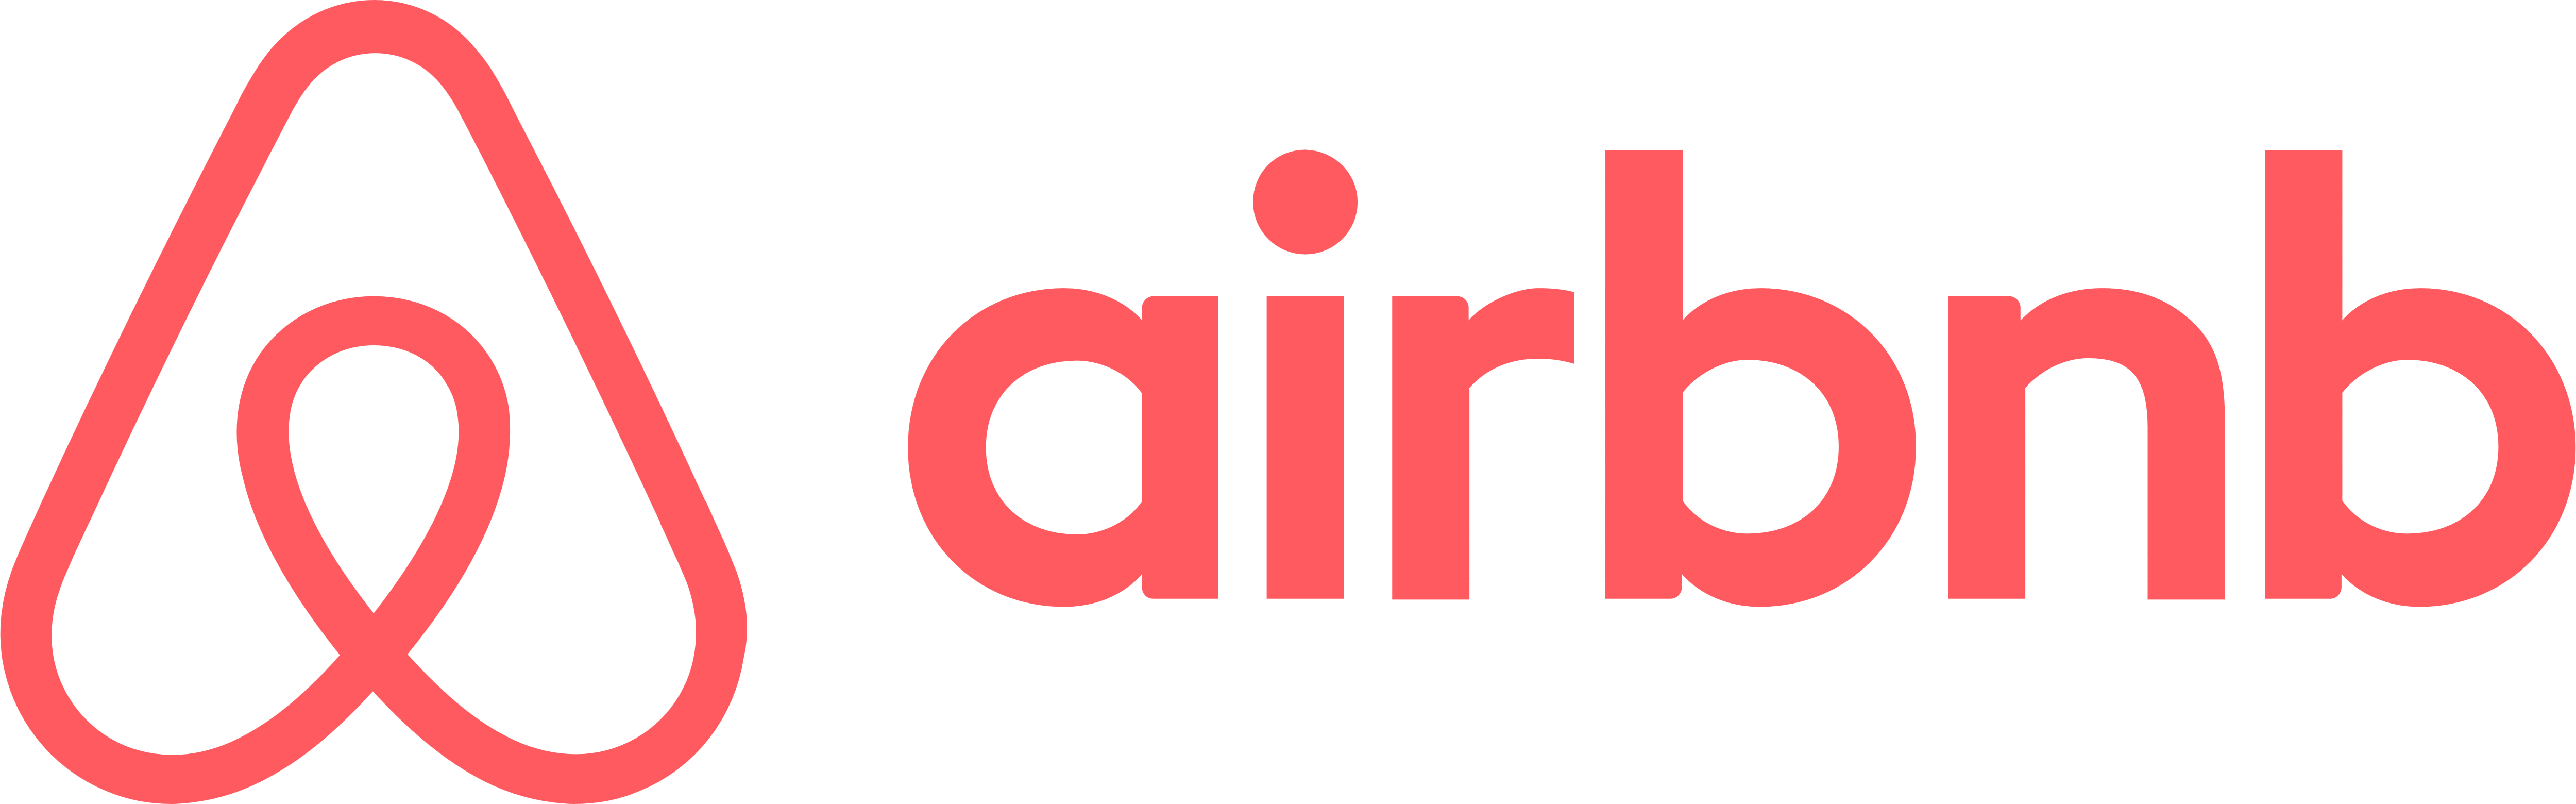 Airbnb – Logos Download